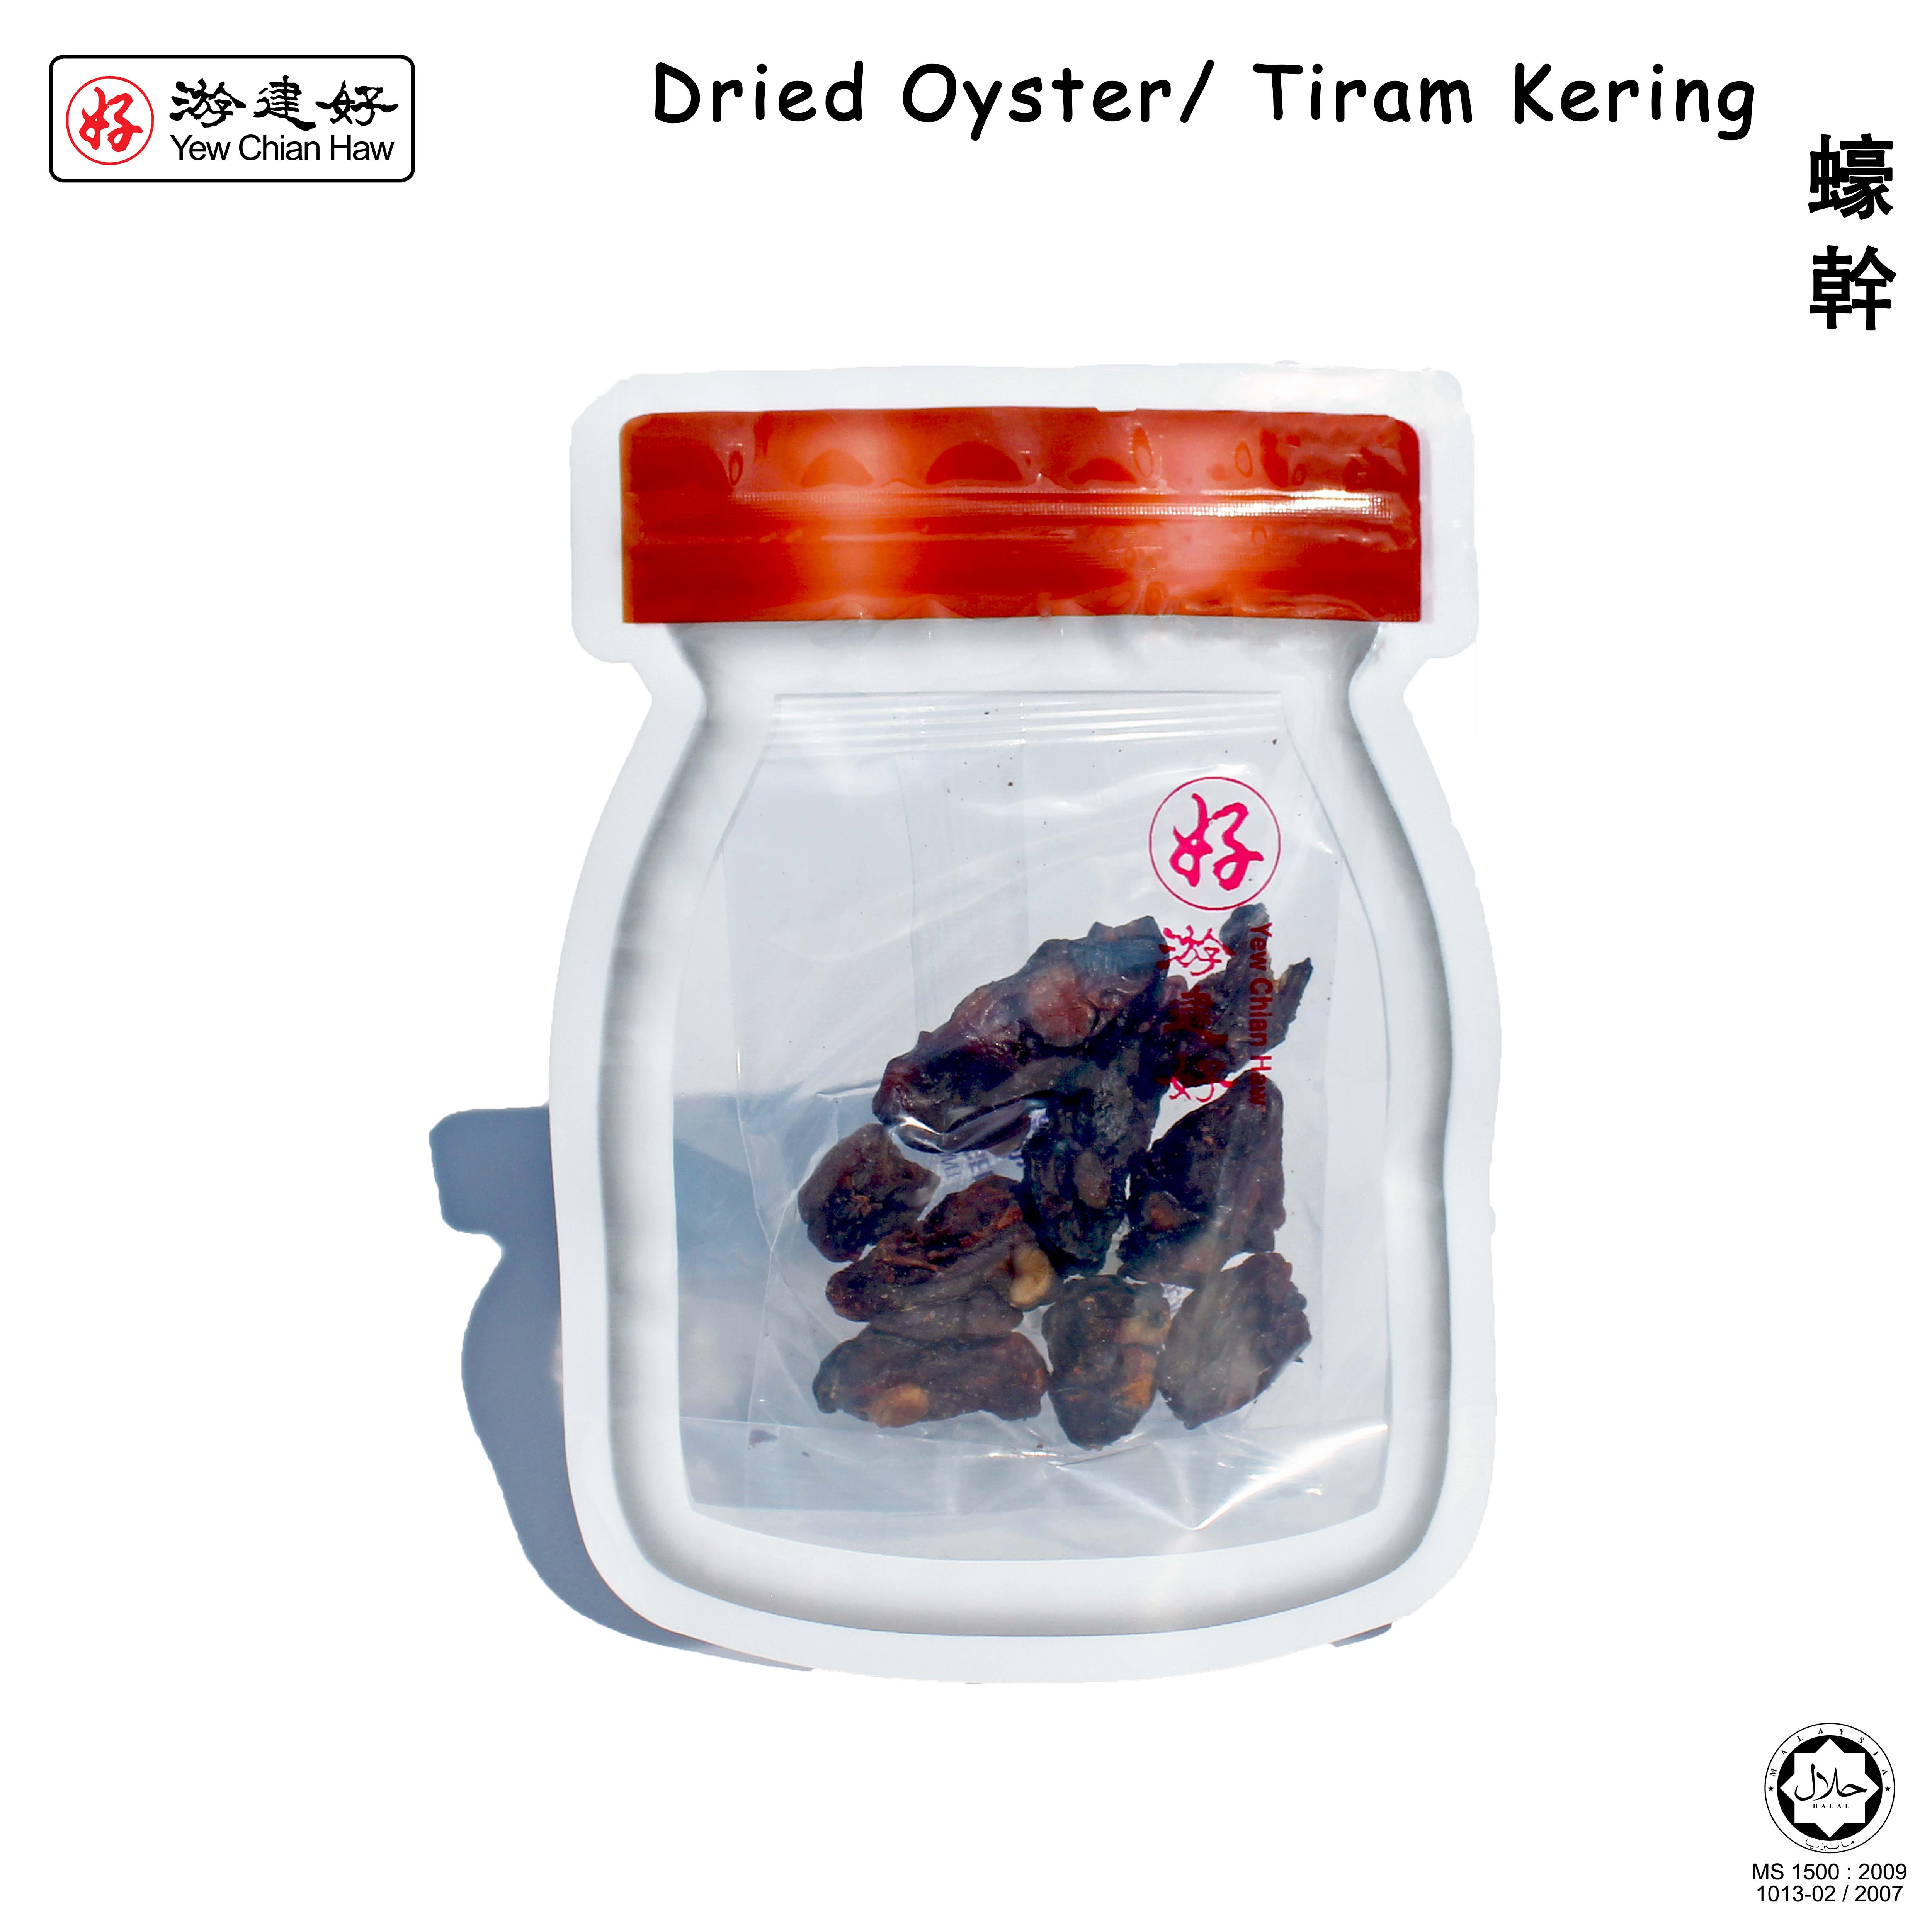 Dried Oyster / Tiram Kering (30g)